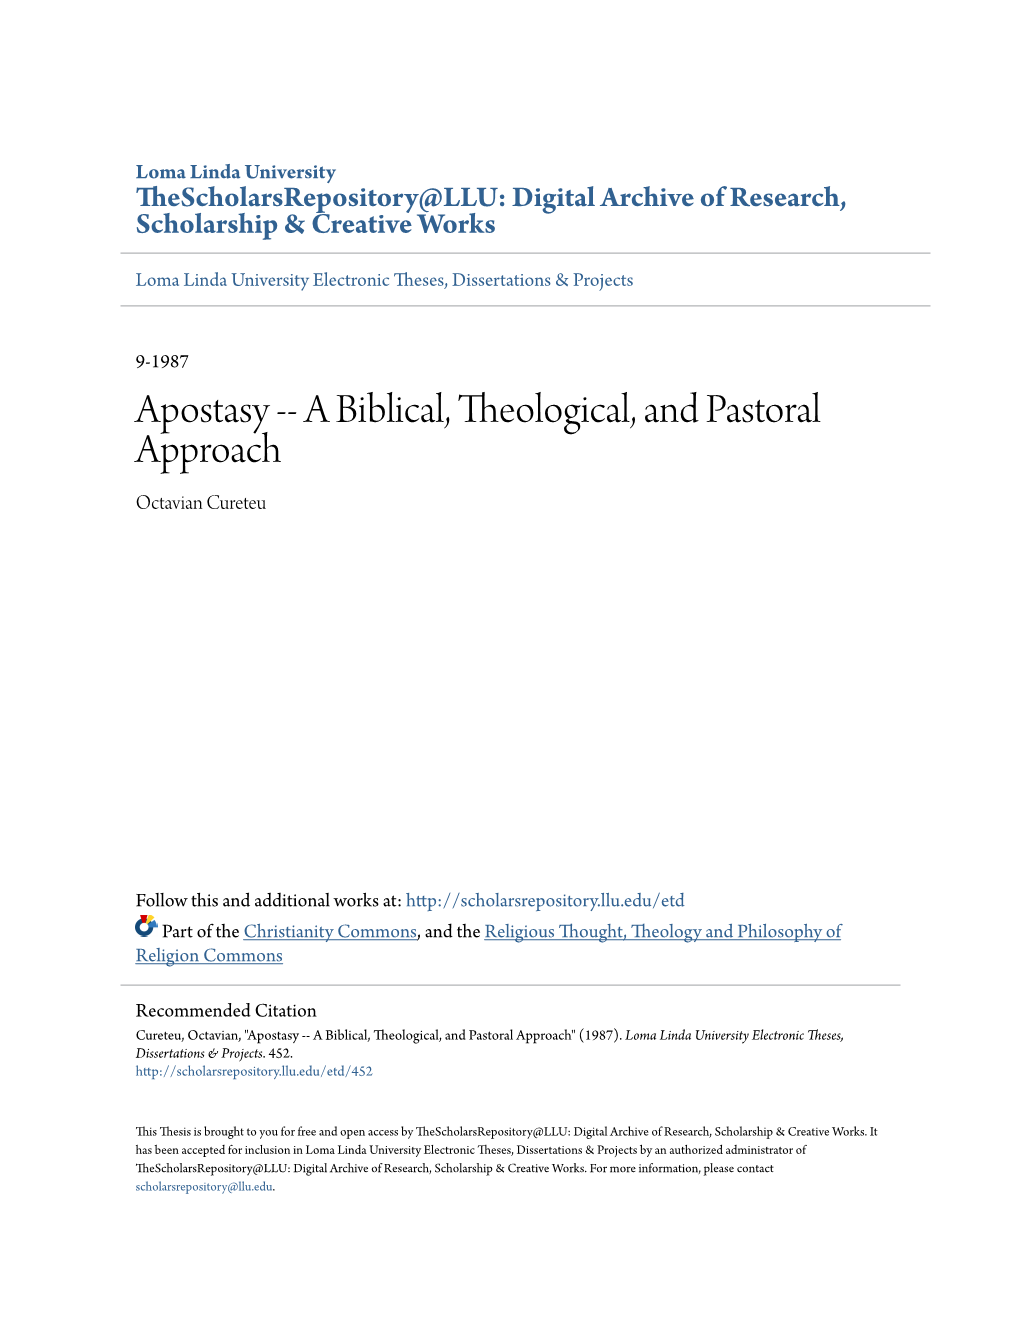 Apostasy -- a Biblical, Theological, and Pastoral Approach Octavian Cureteu